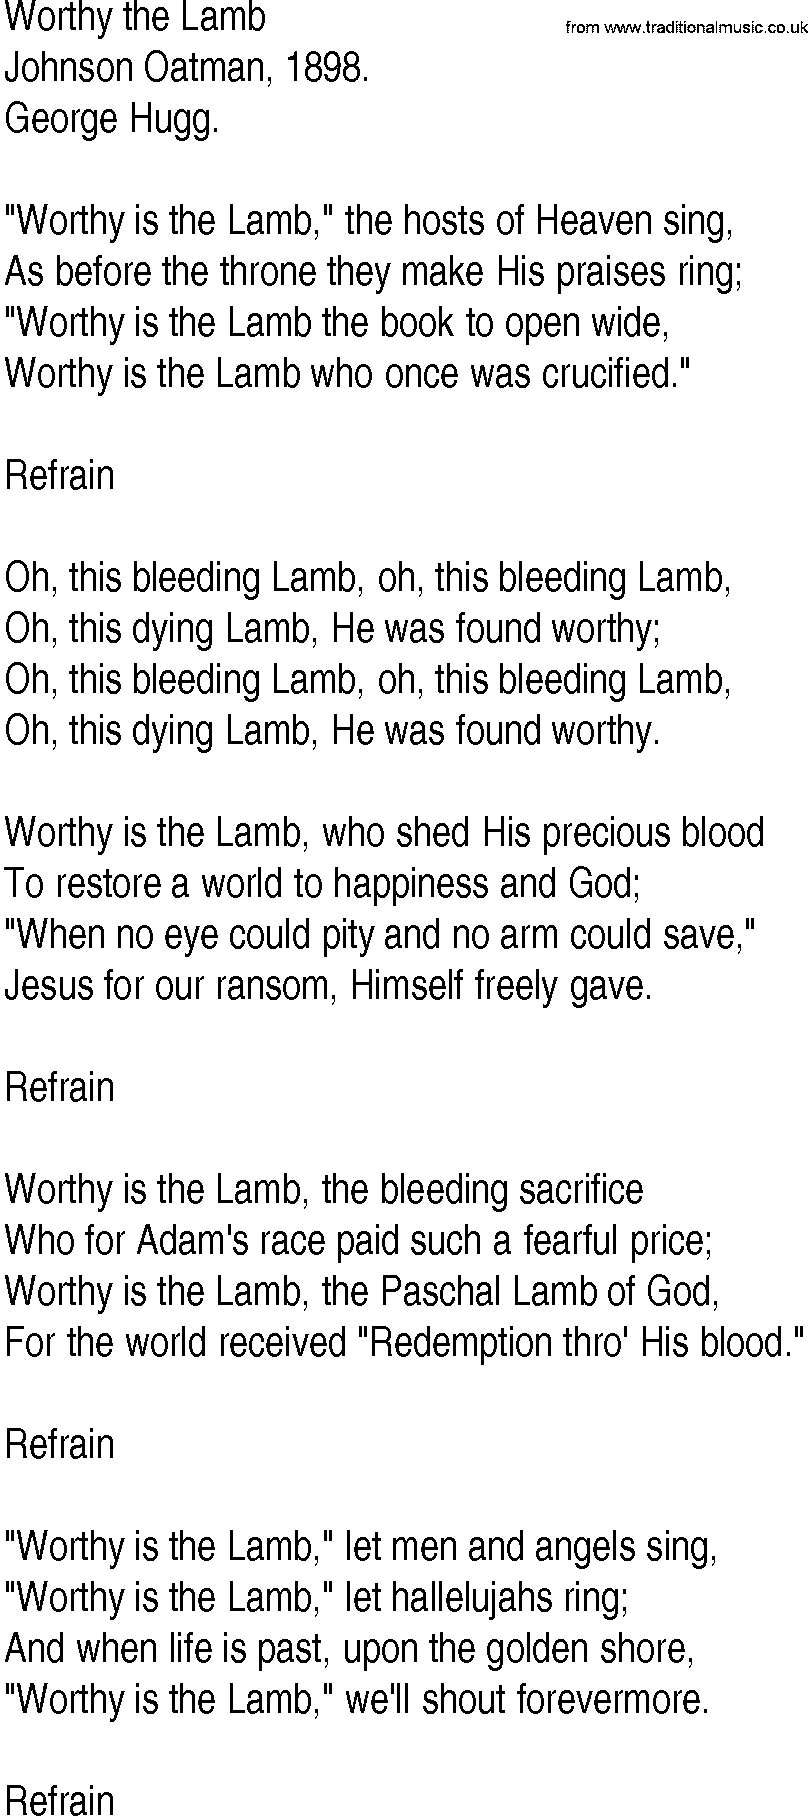 Hymn and Gospel Song: Worthy the Lamb by Johnson Oatman lyrics